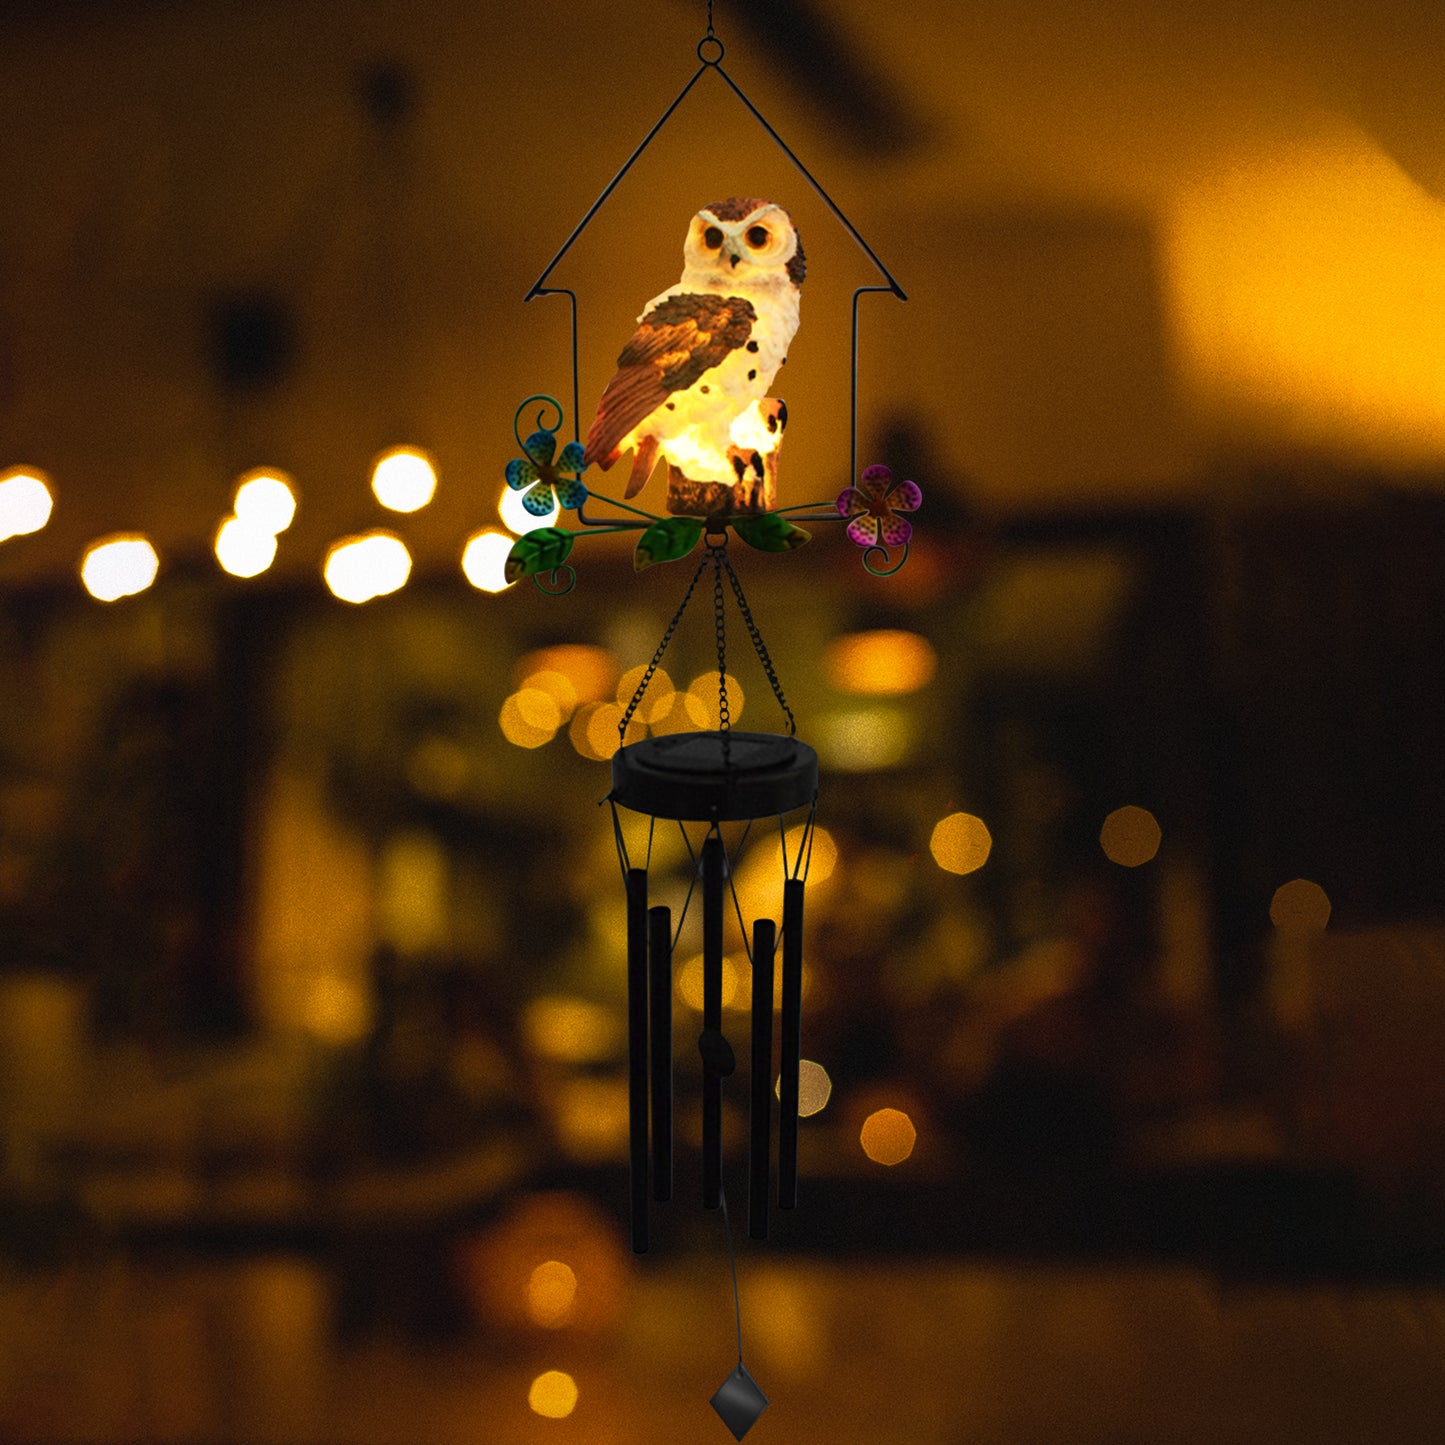 Solar Owl Wind Chime Light Outdoor LED Bird Sculpture Hanging Lamp